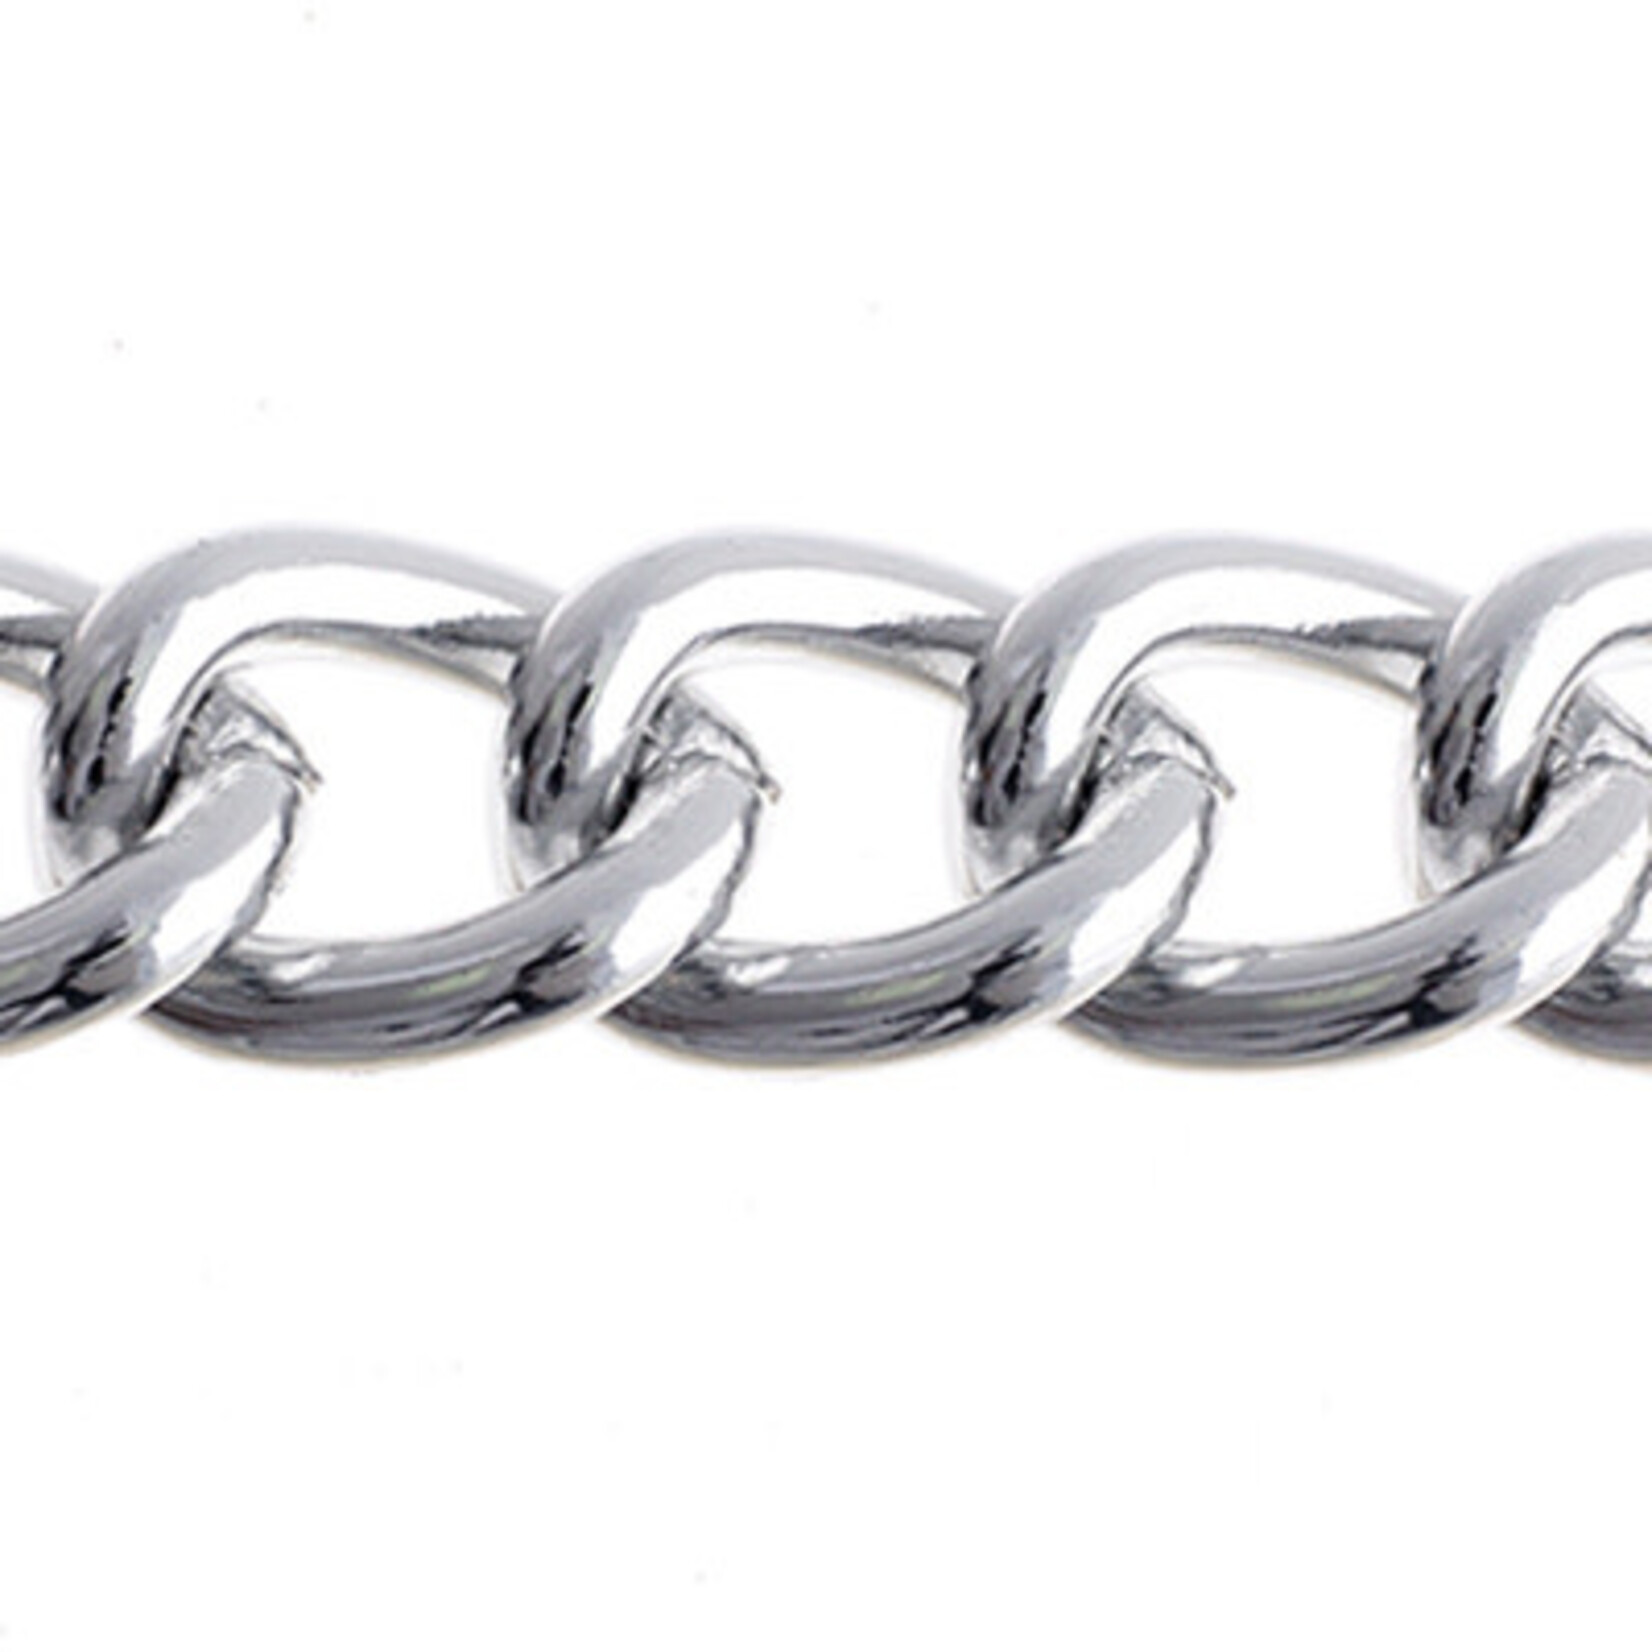 Aluminium Chain 15x12mm Silver 25m/Spool